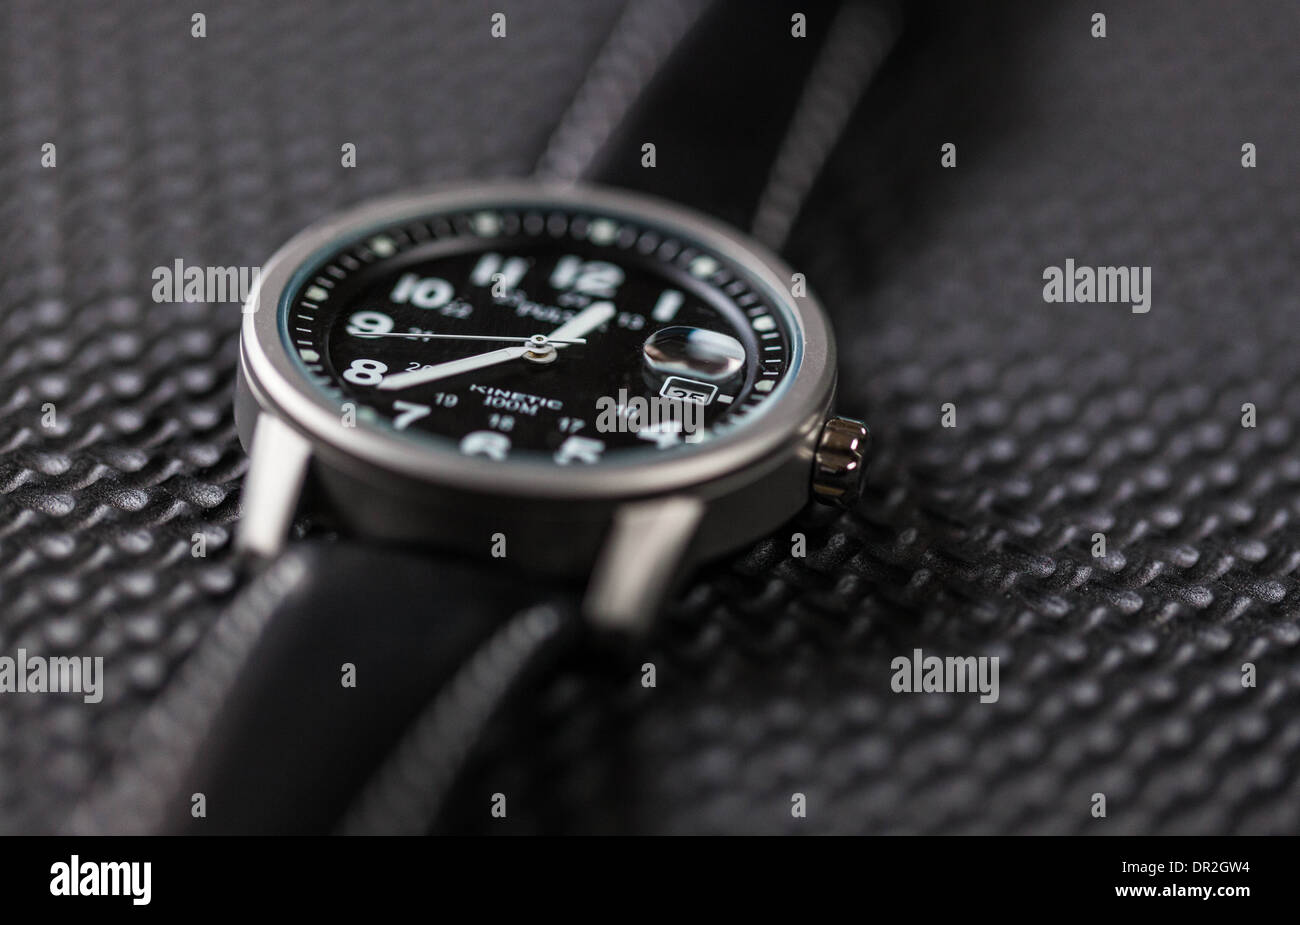 Men's wrist watch Stock Photo